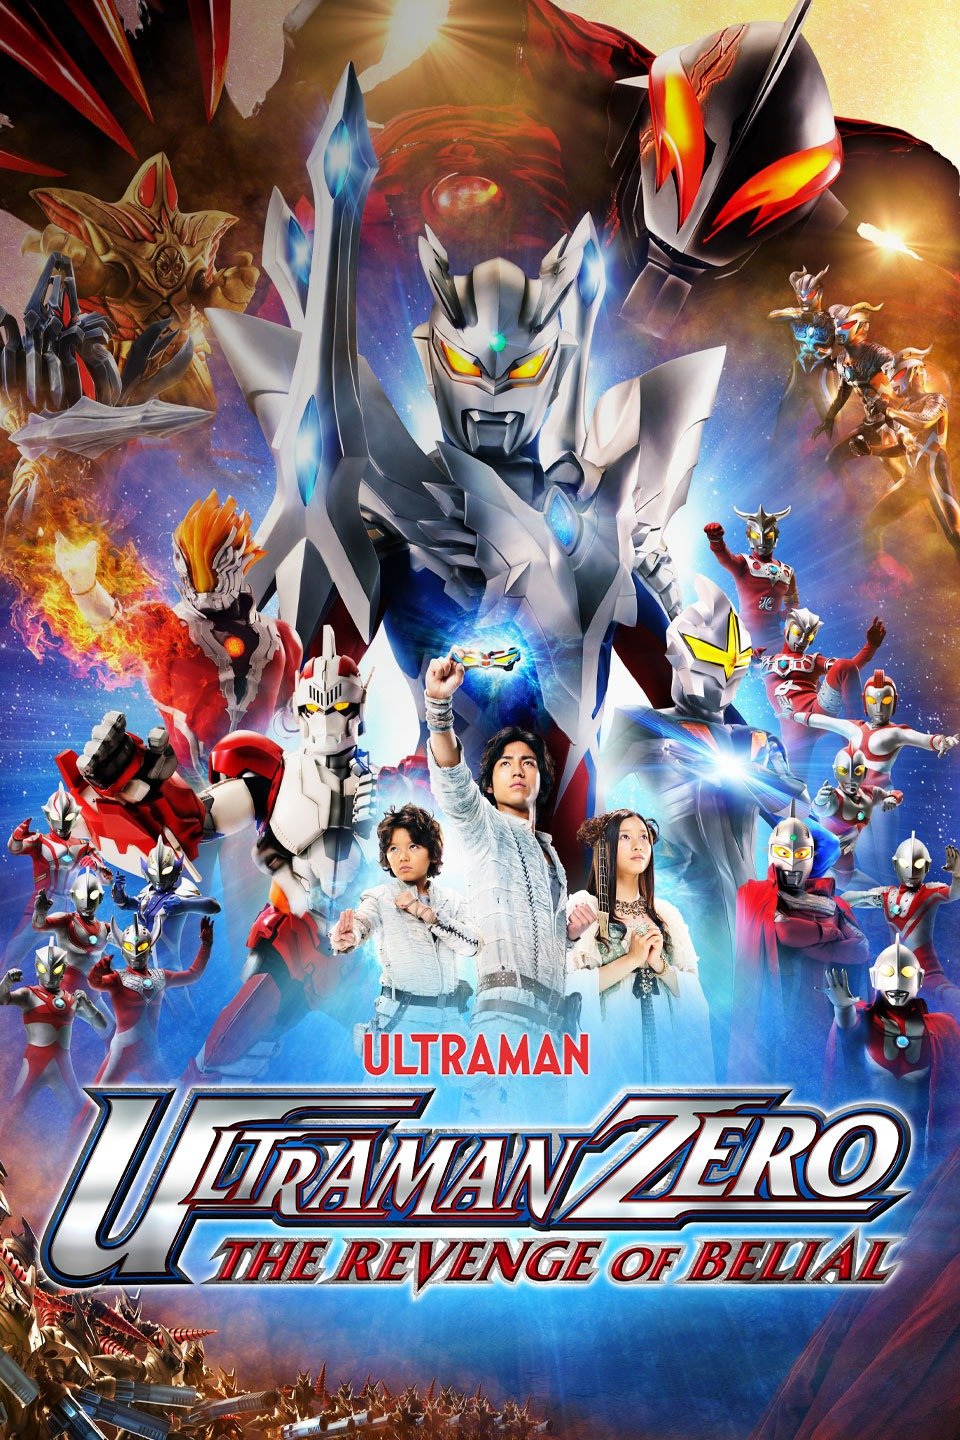 Ultraman z the movie